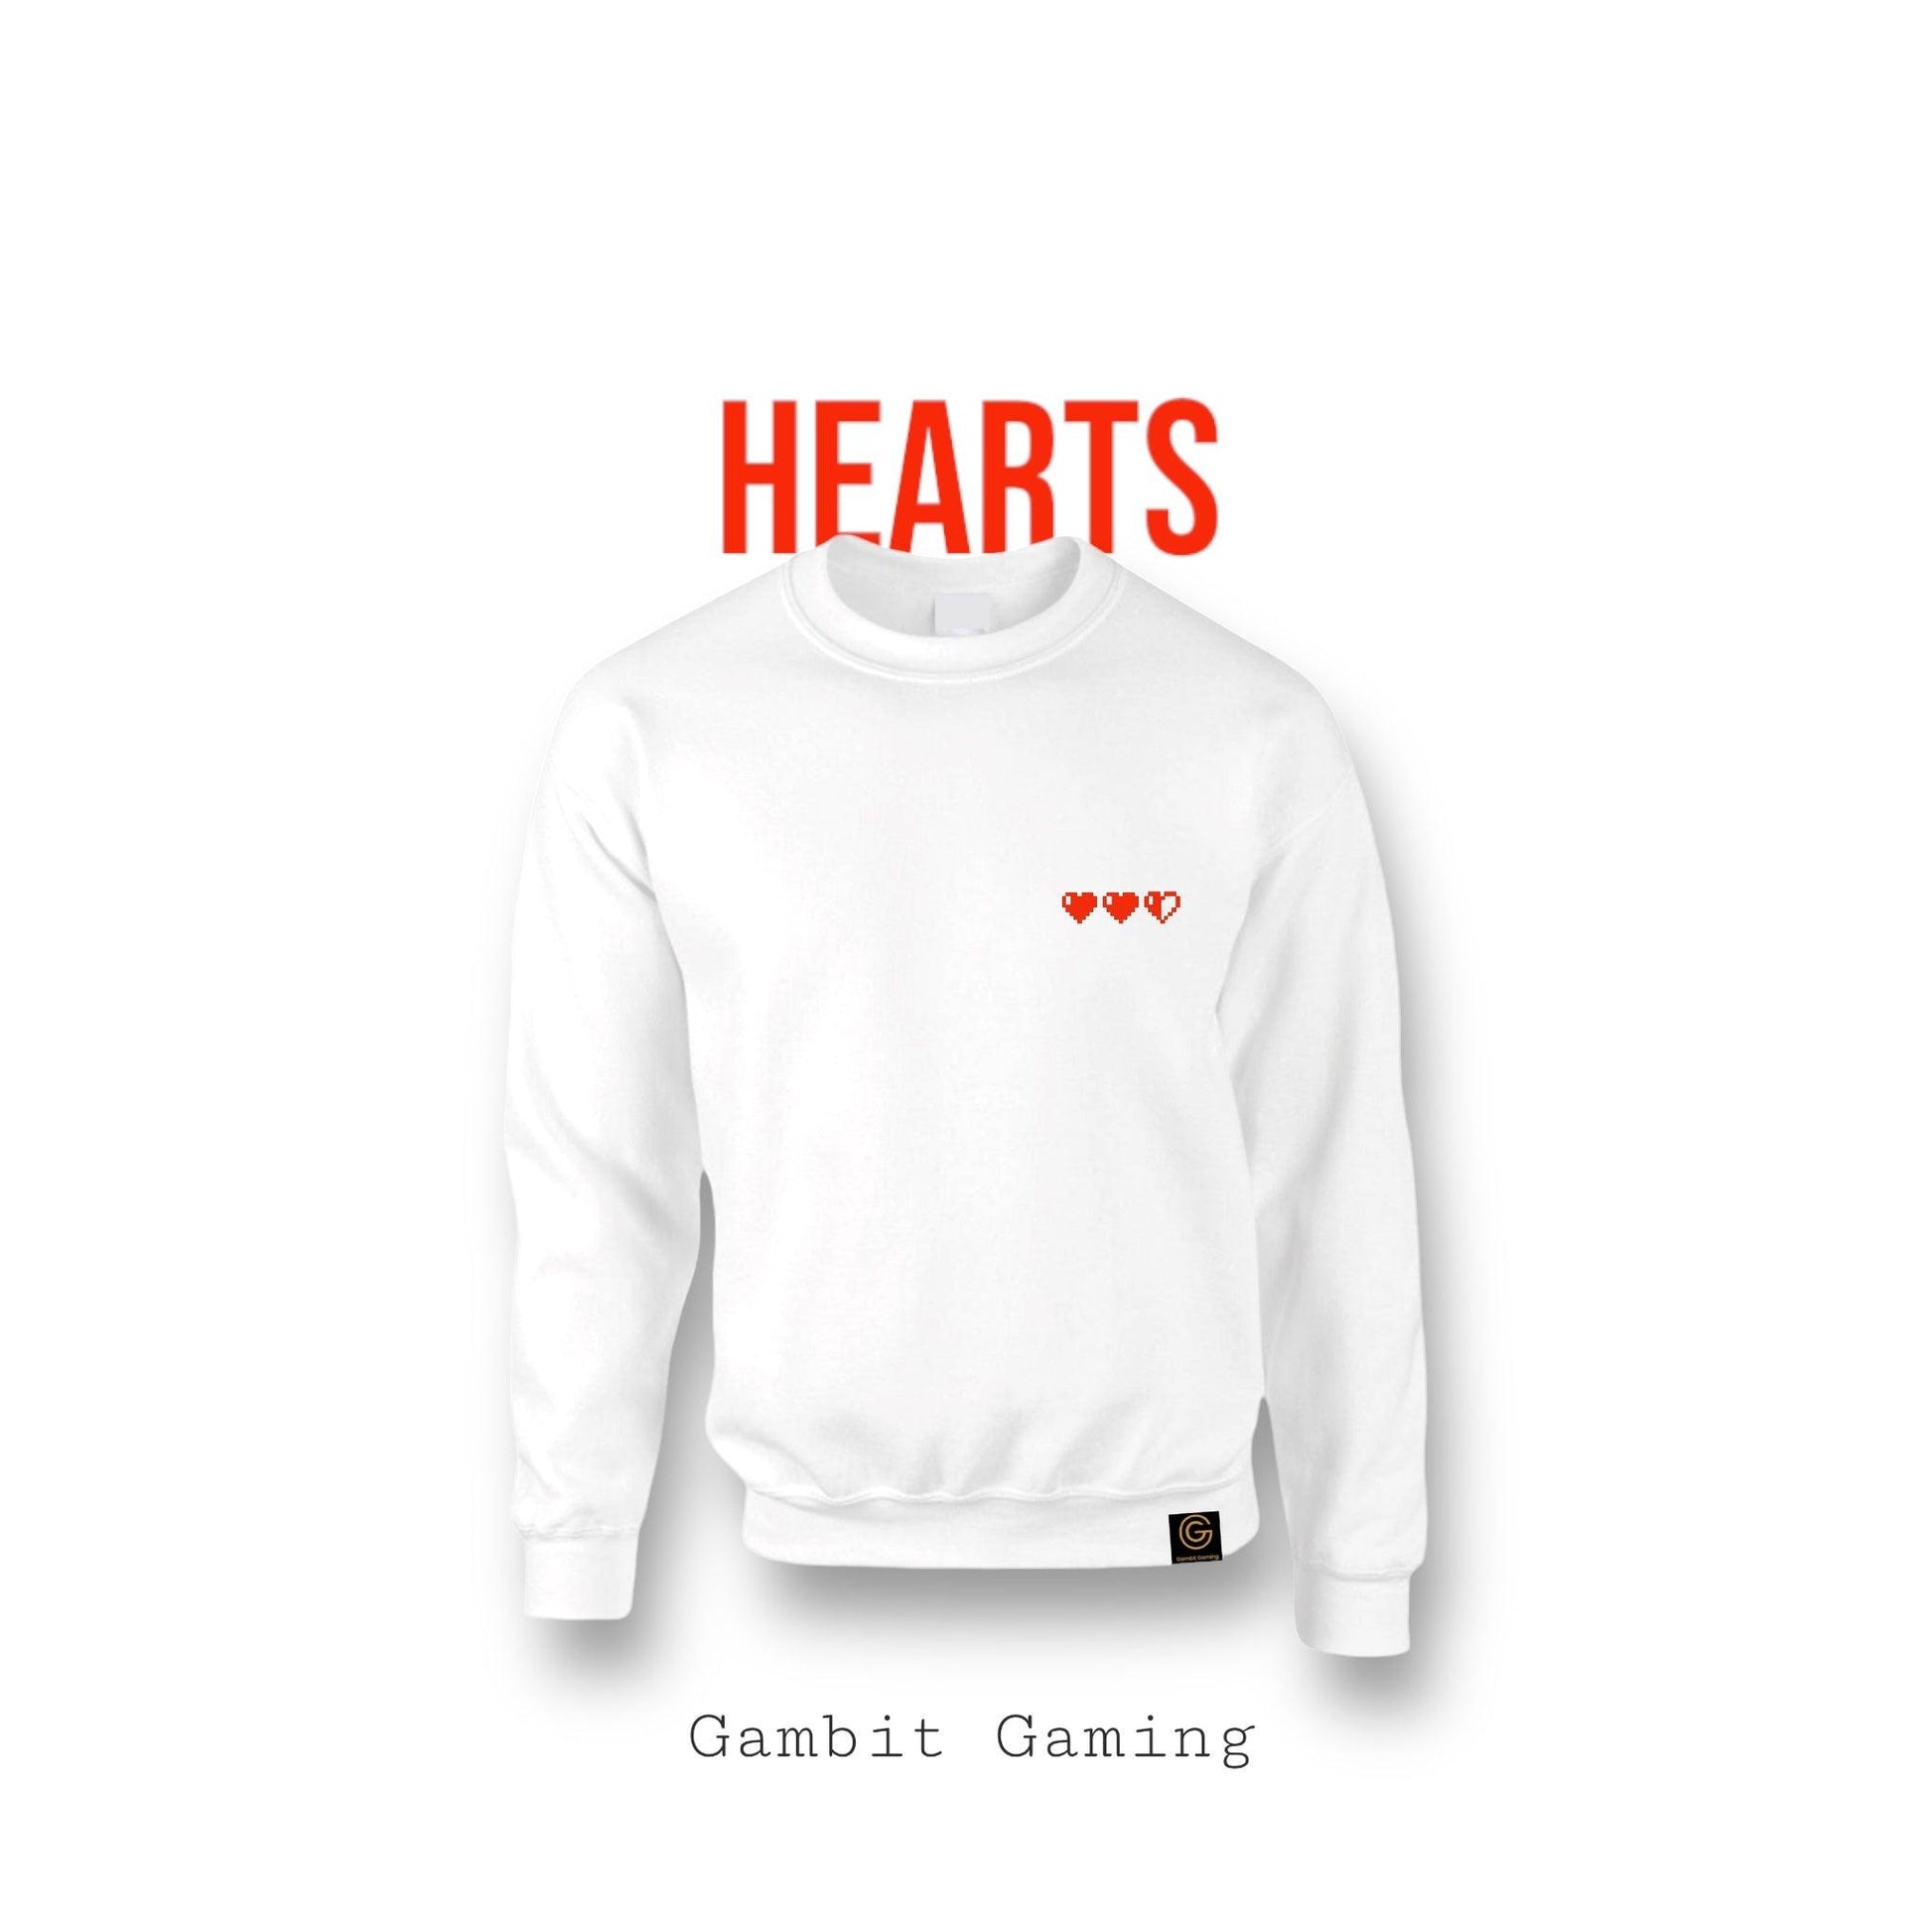 Hearts Sweater - Gambit Gaming